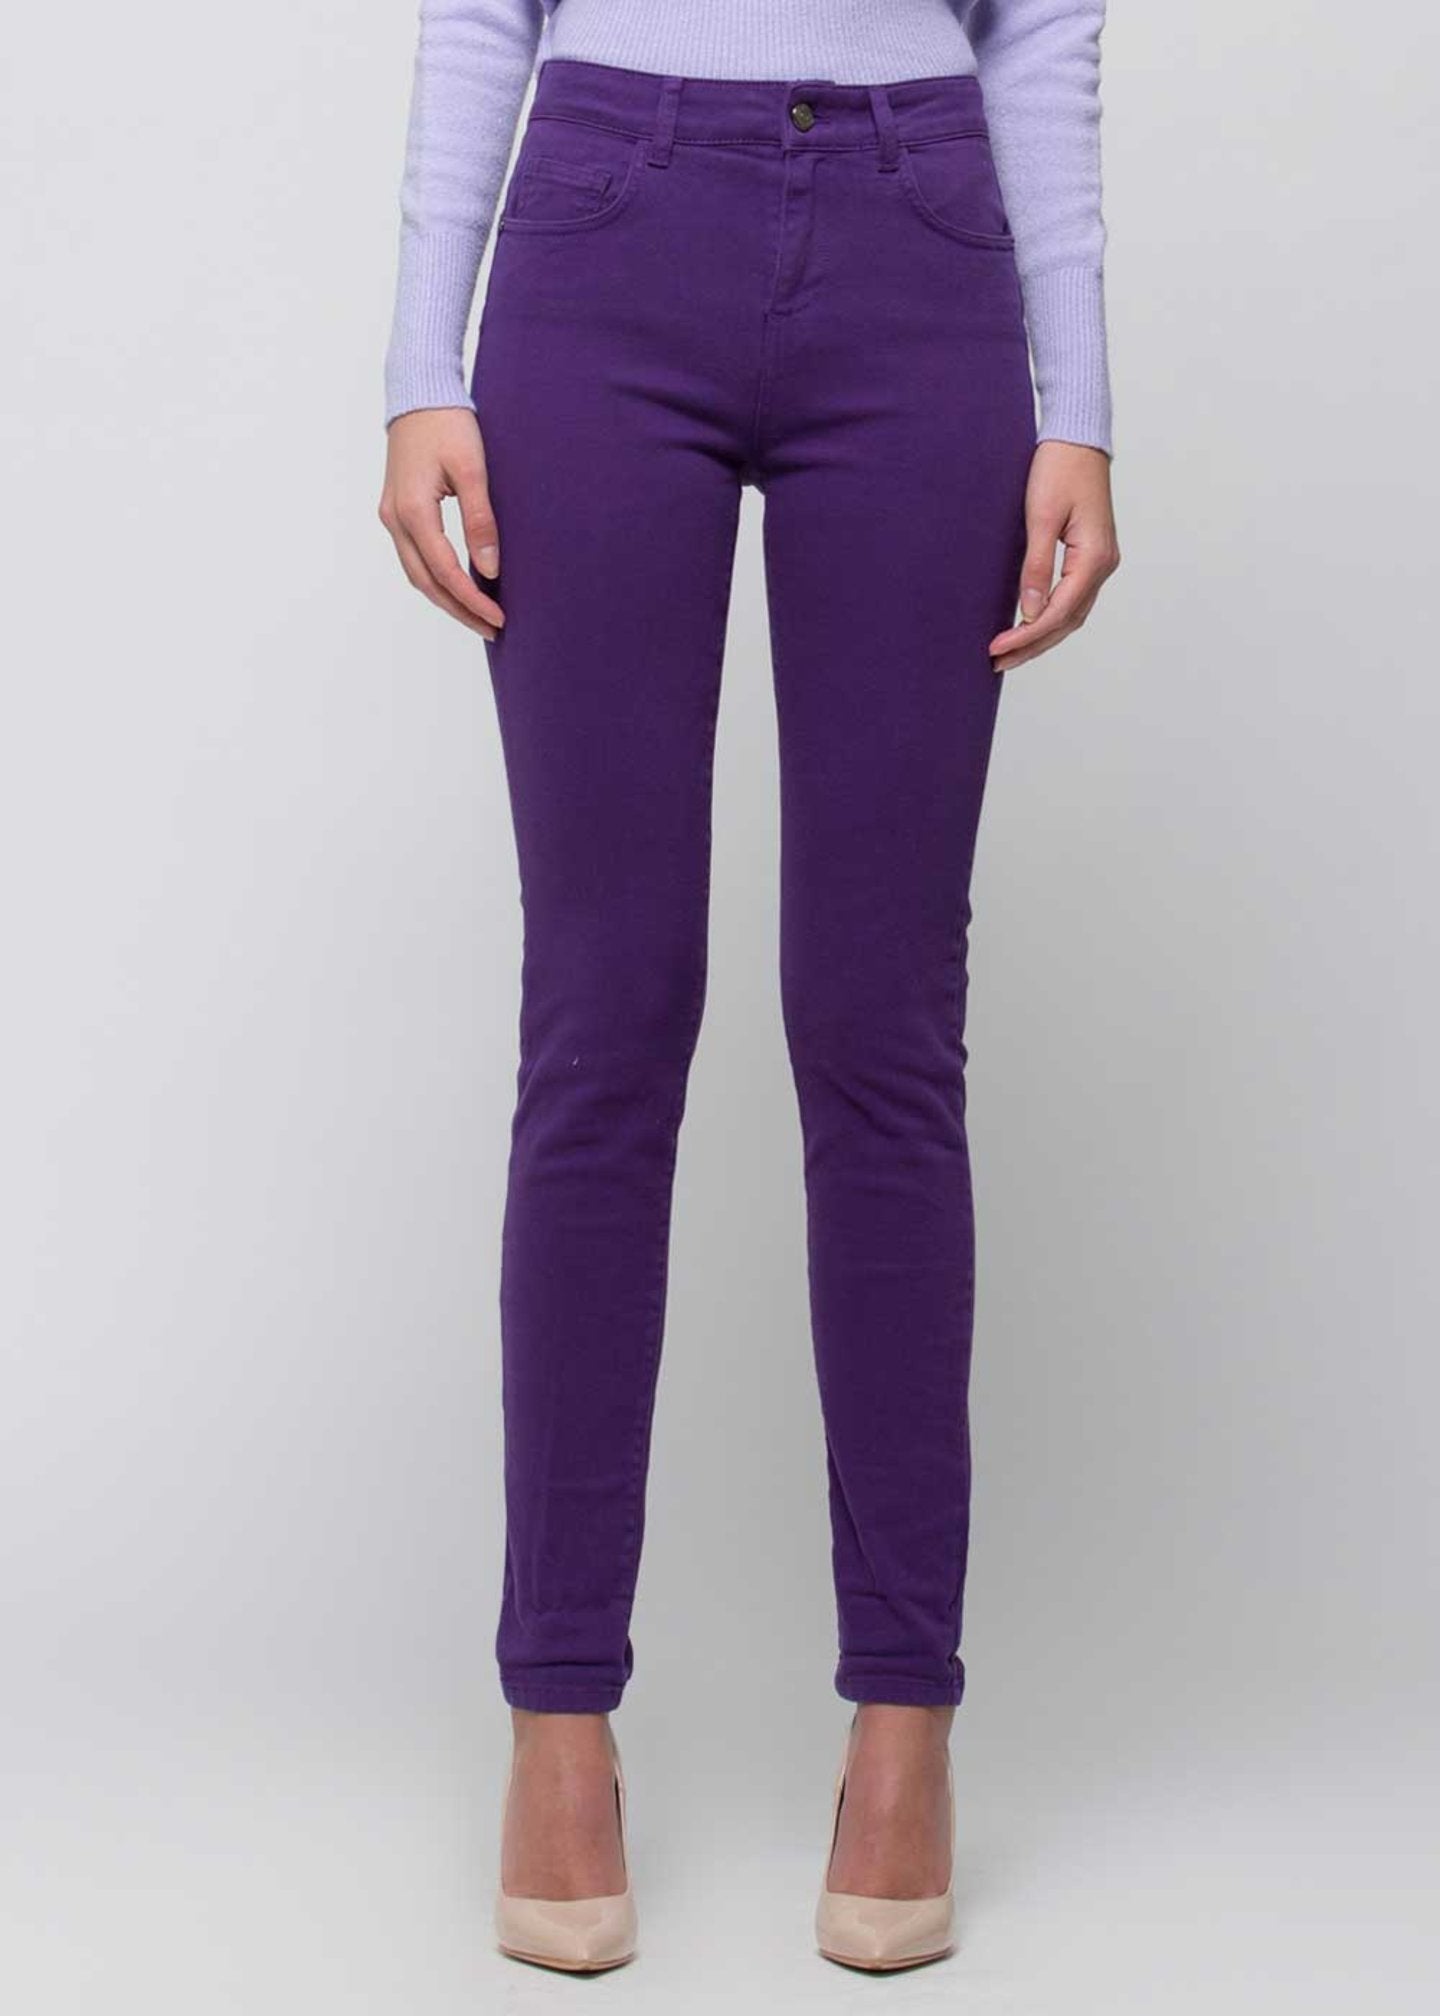 Pantalone Kocca / Viola - Ideal Moda